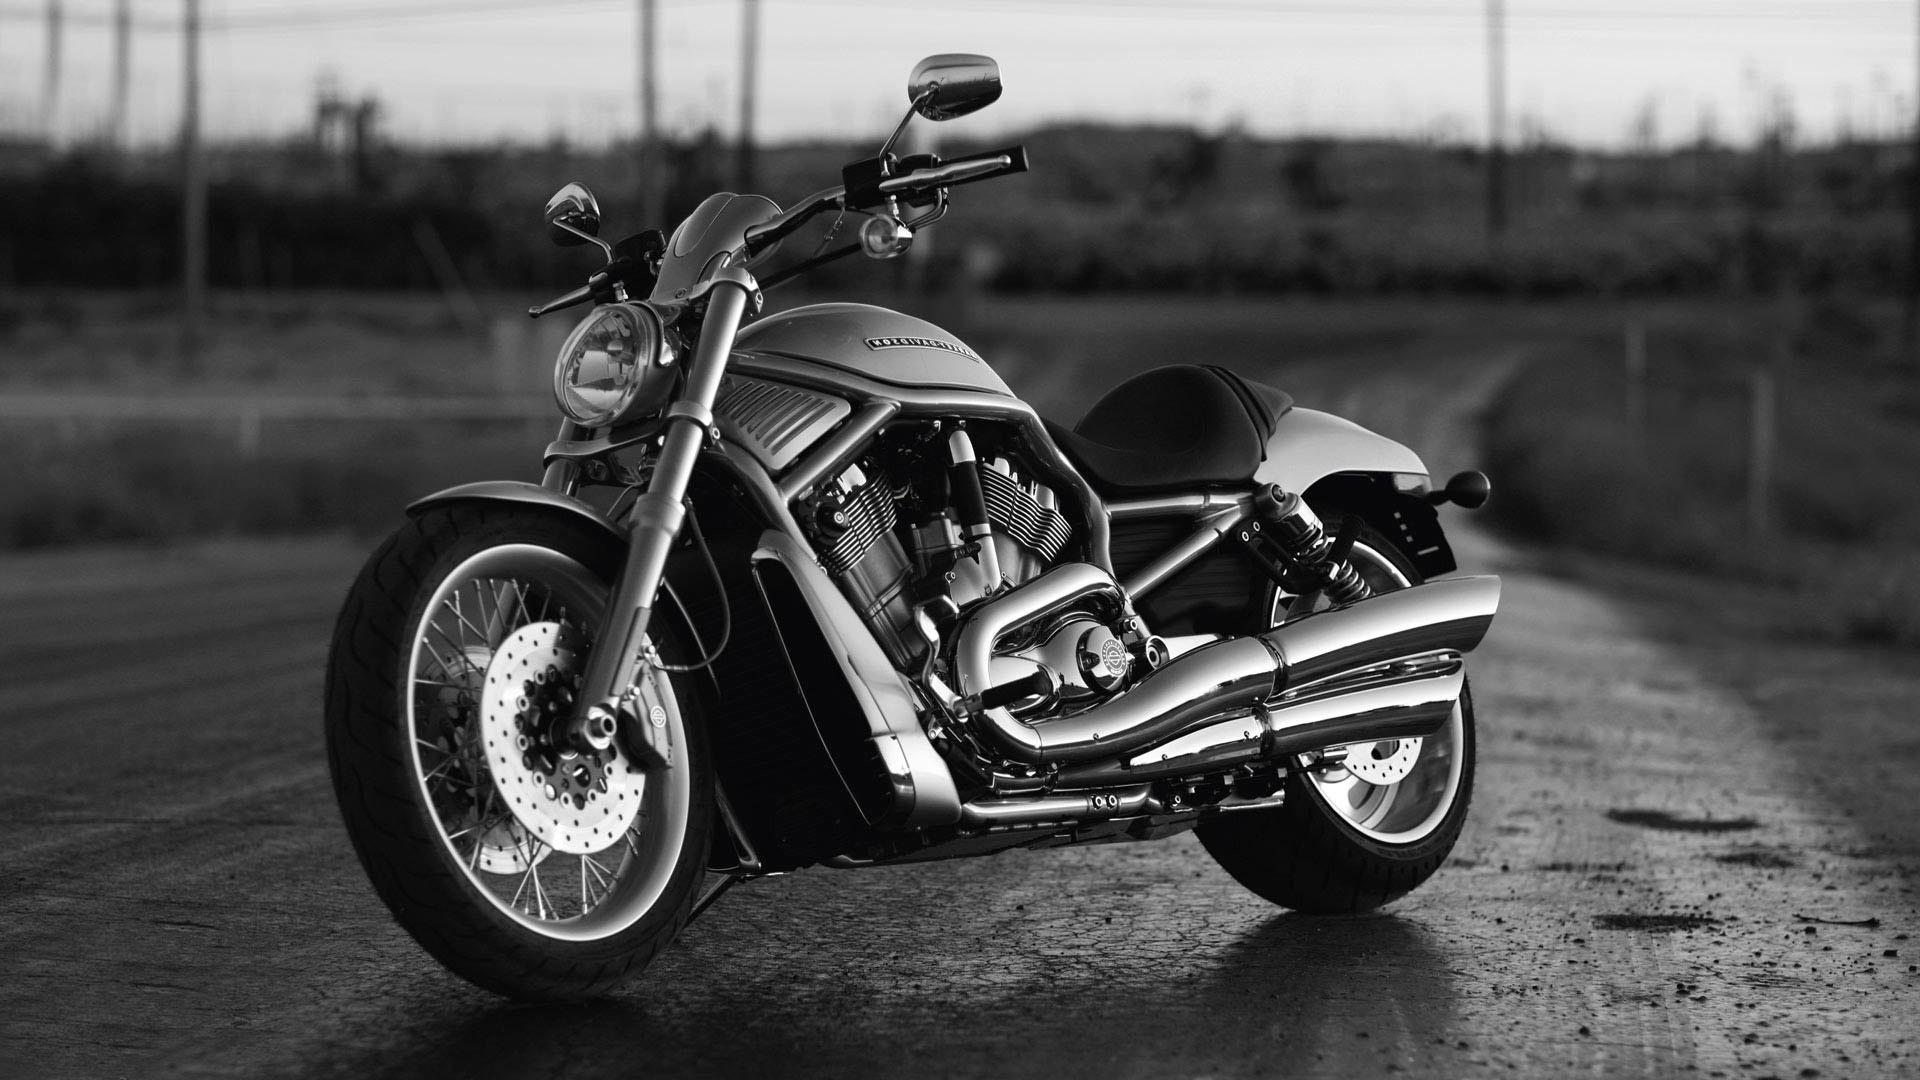 Harley-Davidson Bikes, Sleek and stylish, Harley Davidson screen wallpaper, Rider's delight, 1920x1080 Full HD Desktop